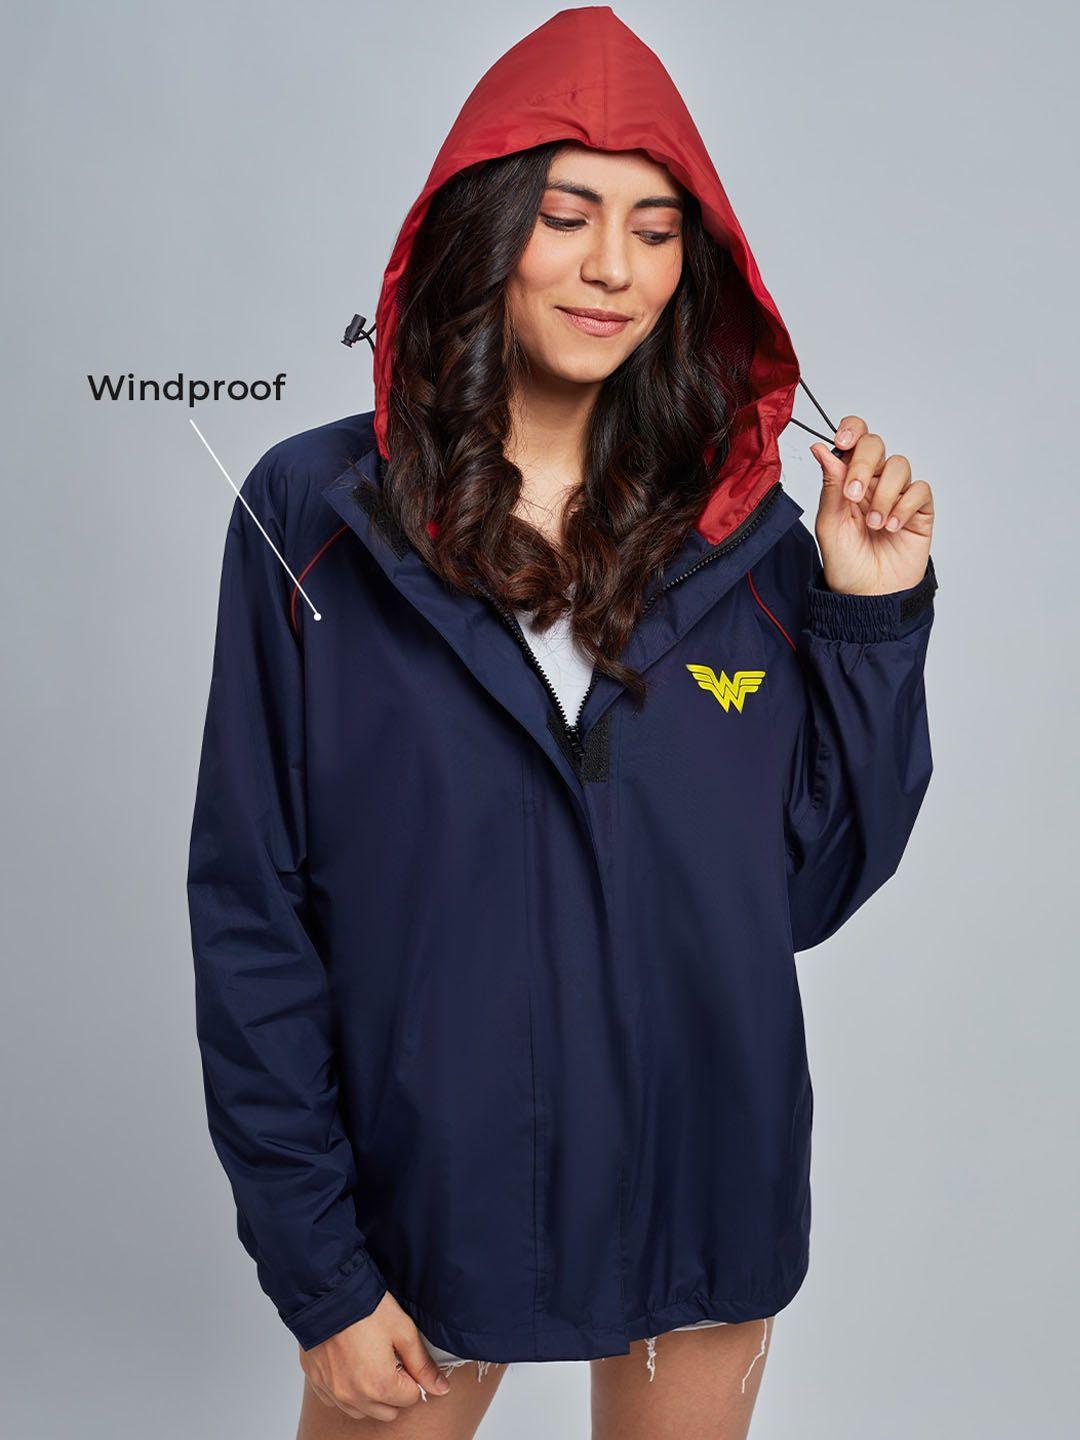 the souled store women navy blue & red wonder women logo windcheater outdoor sporty jacket